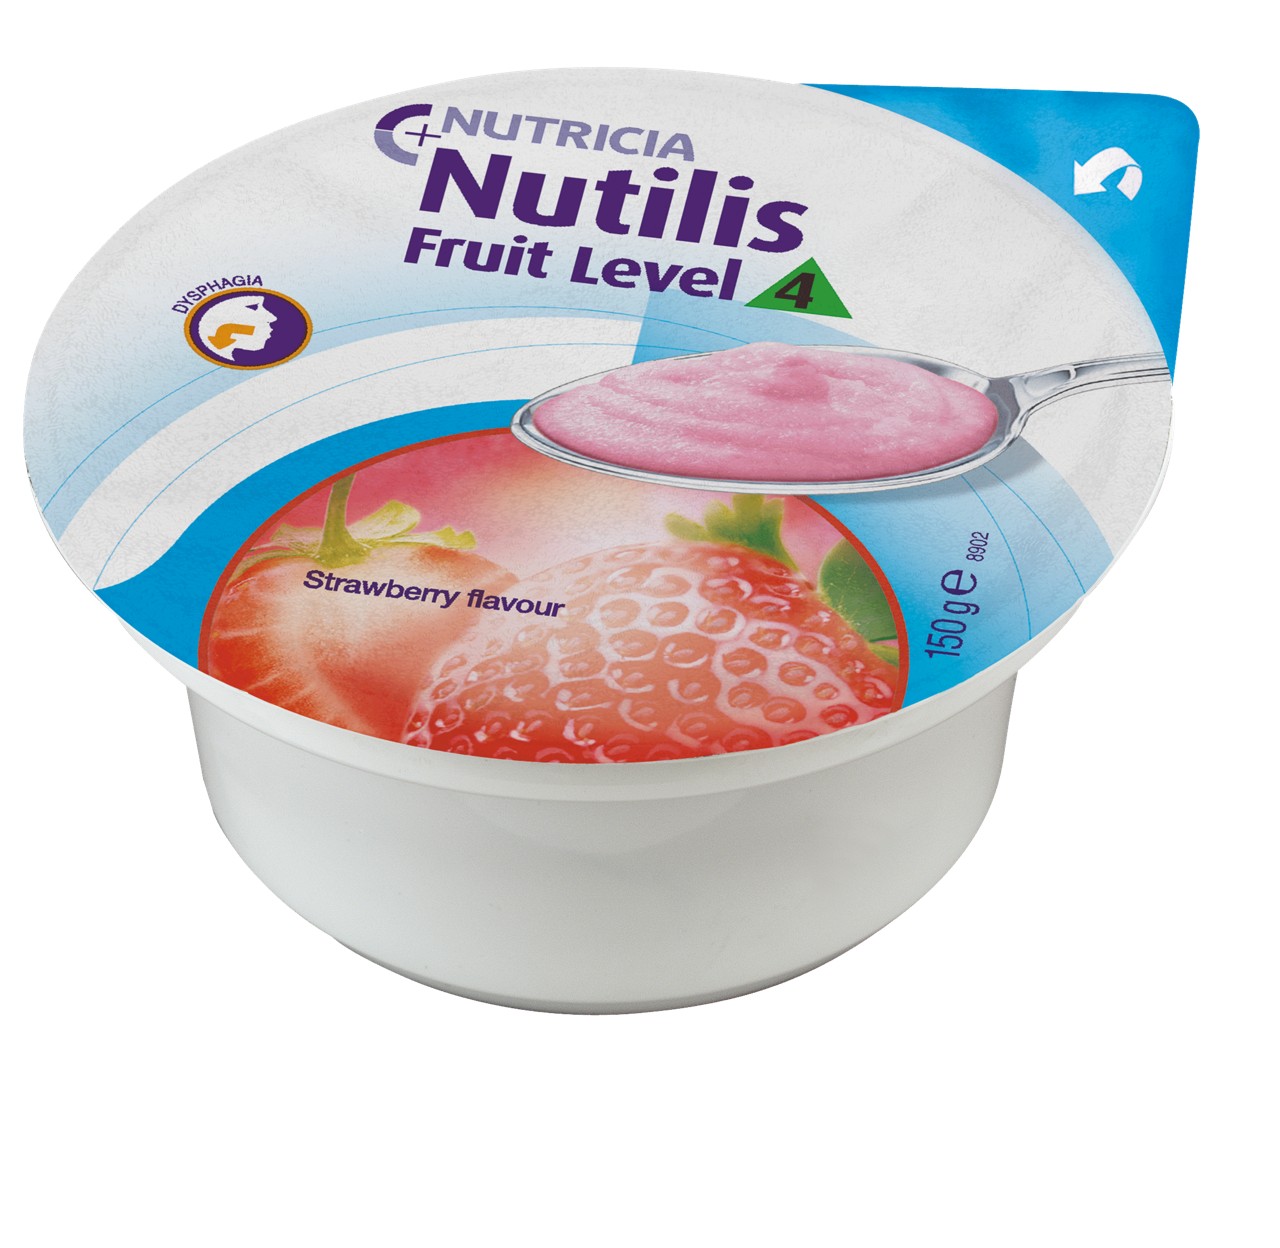 en-GB,Nutilis Fruit Level 4